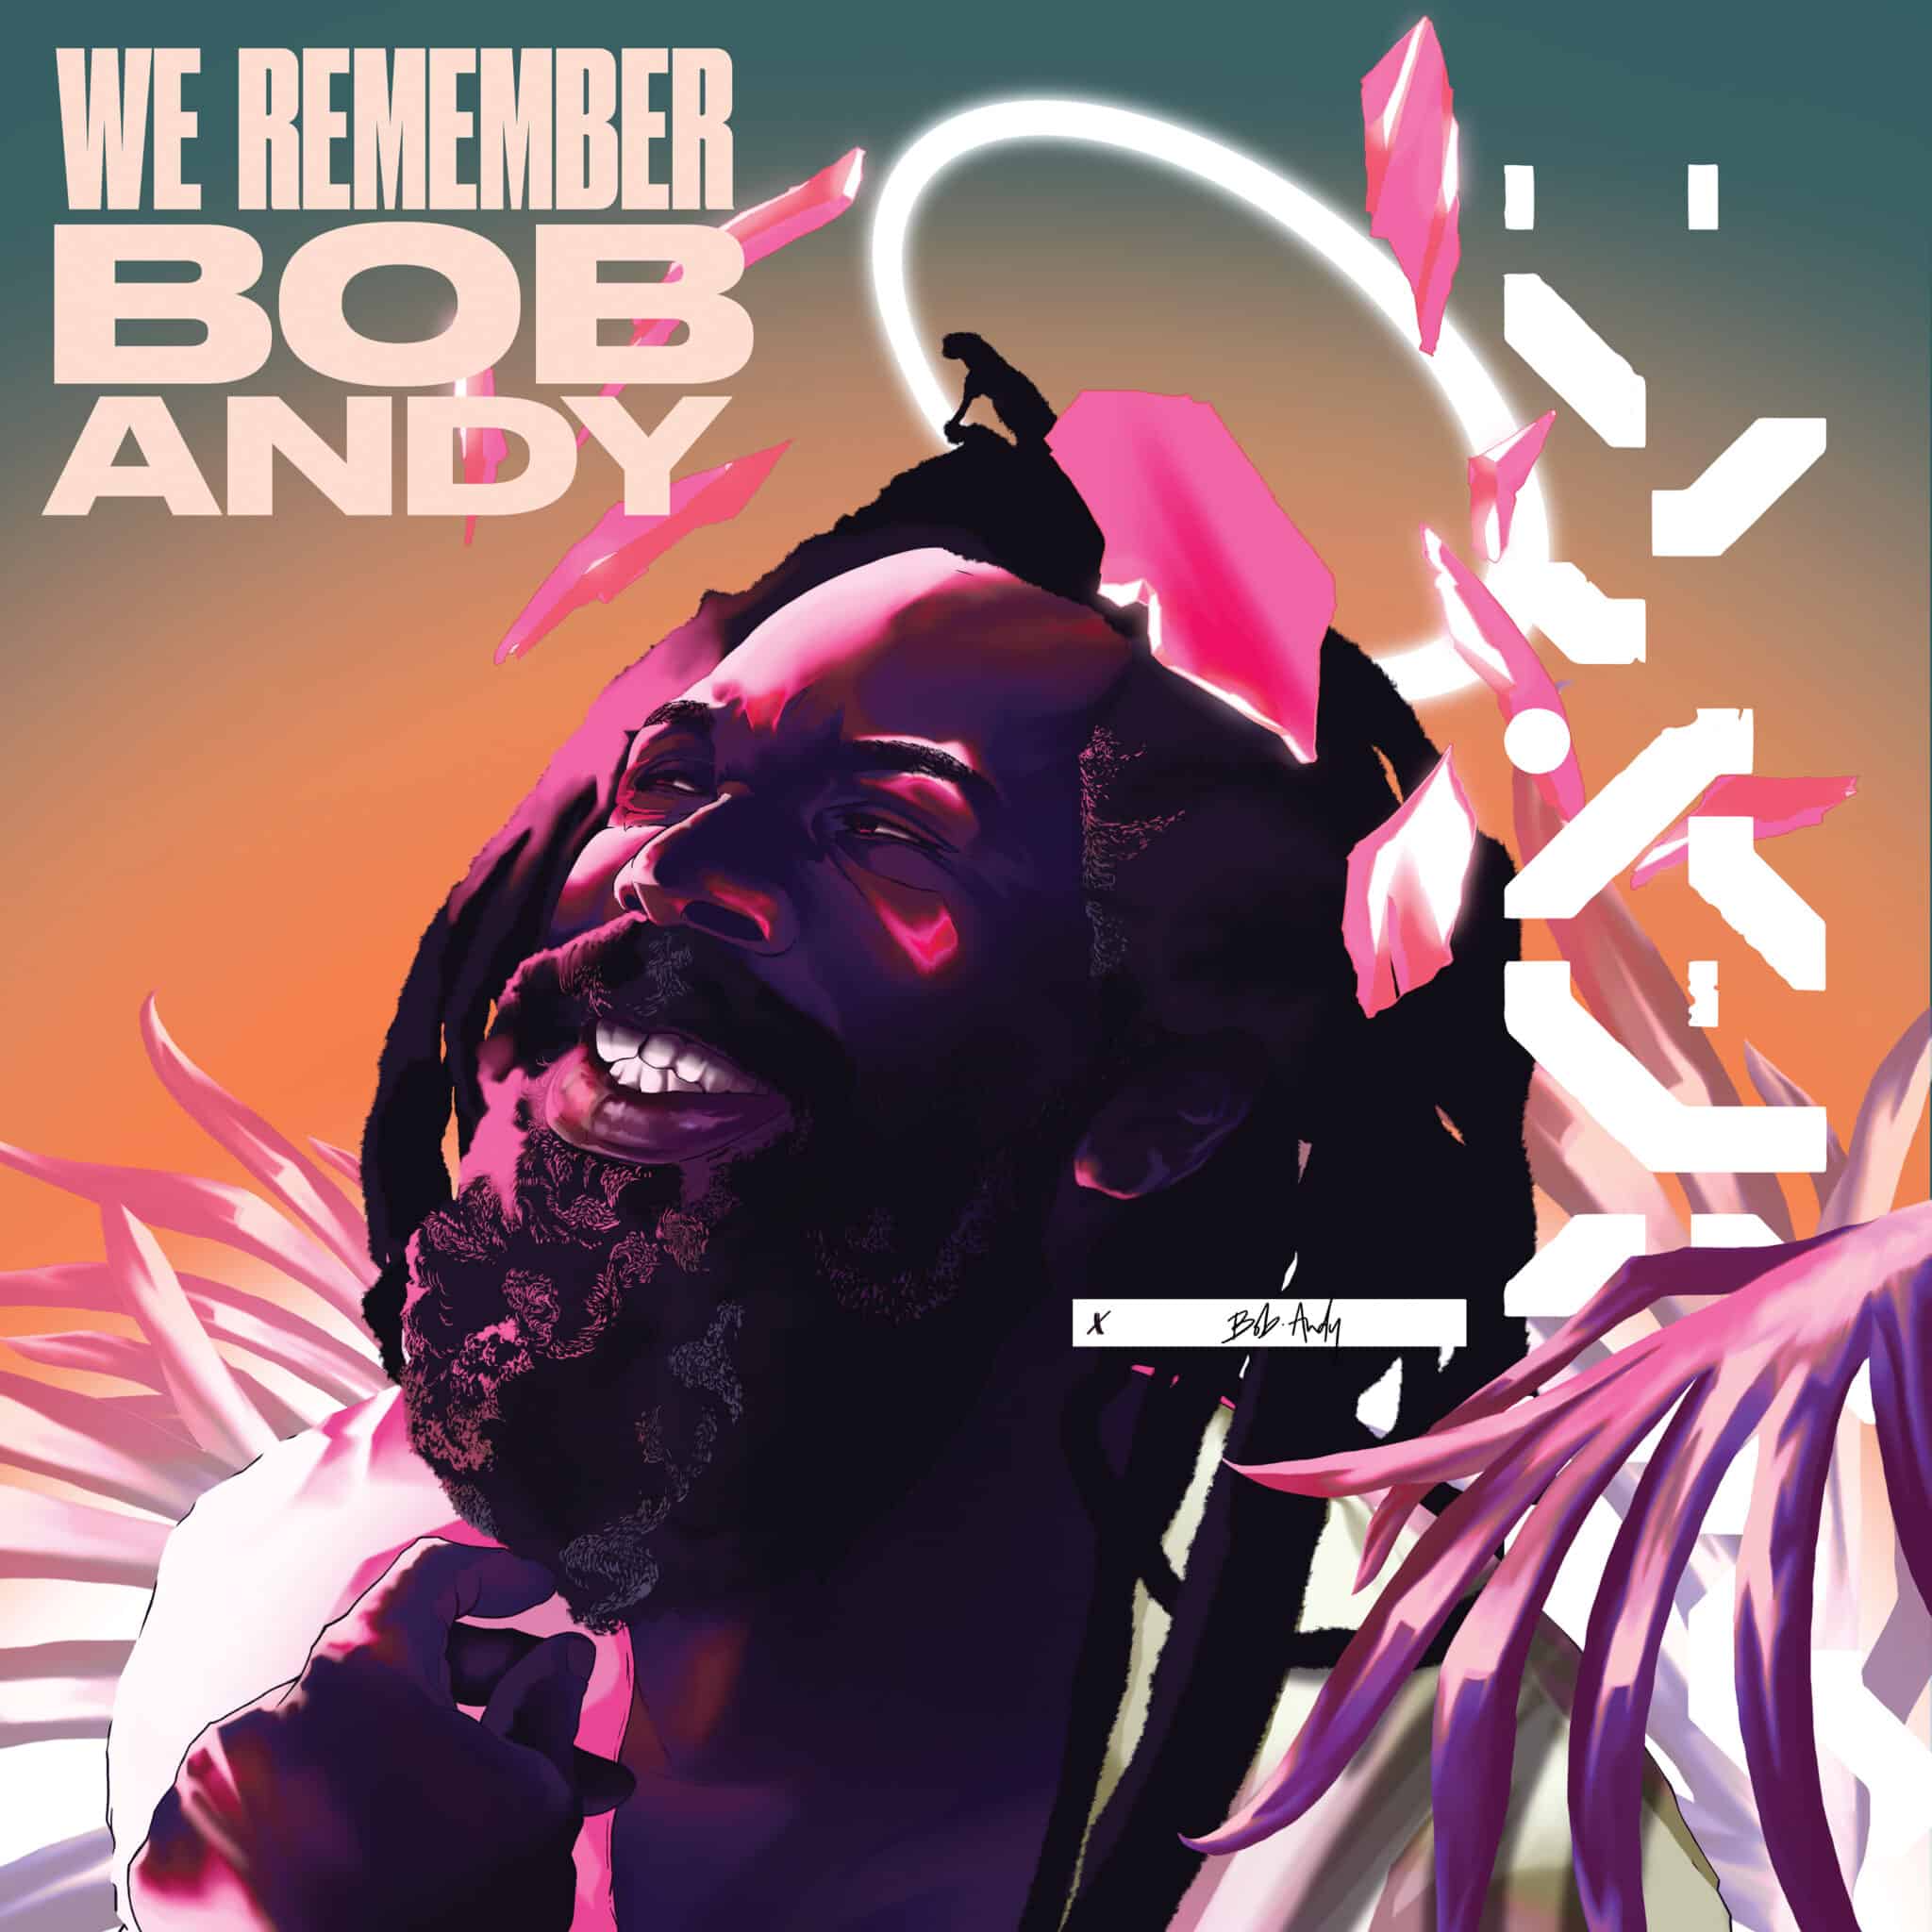 "We Remember Bob Andy" Album Cover